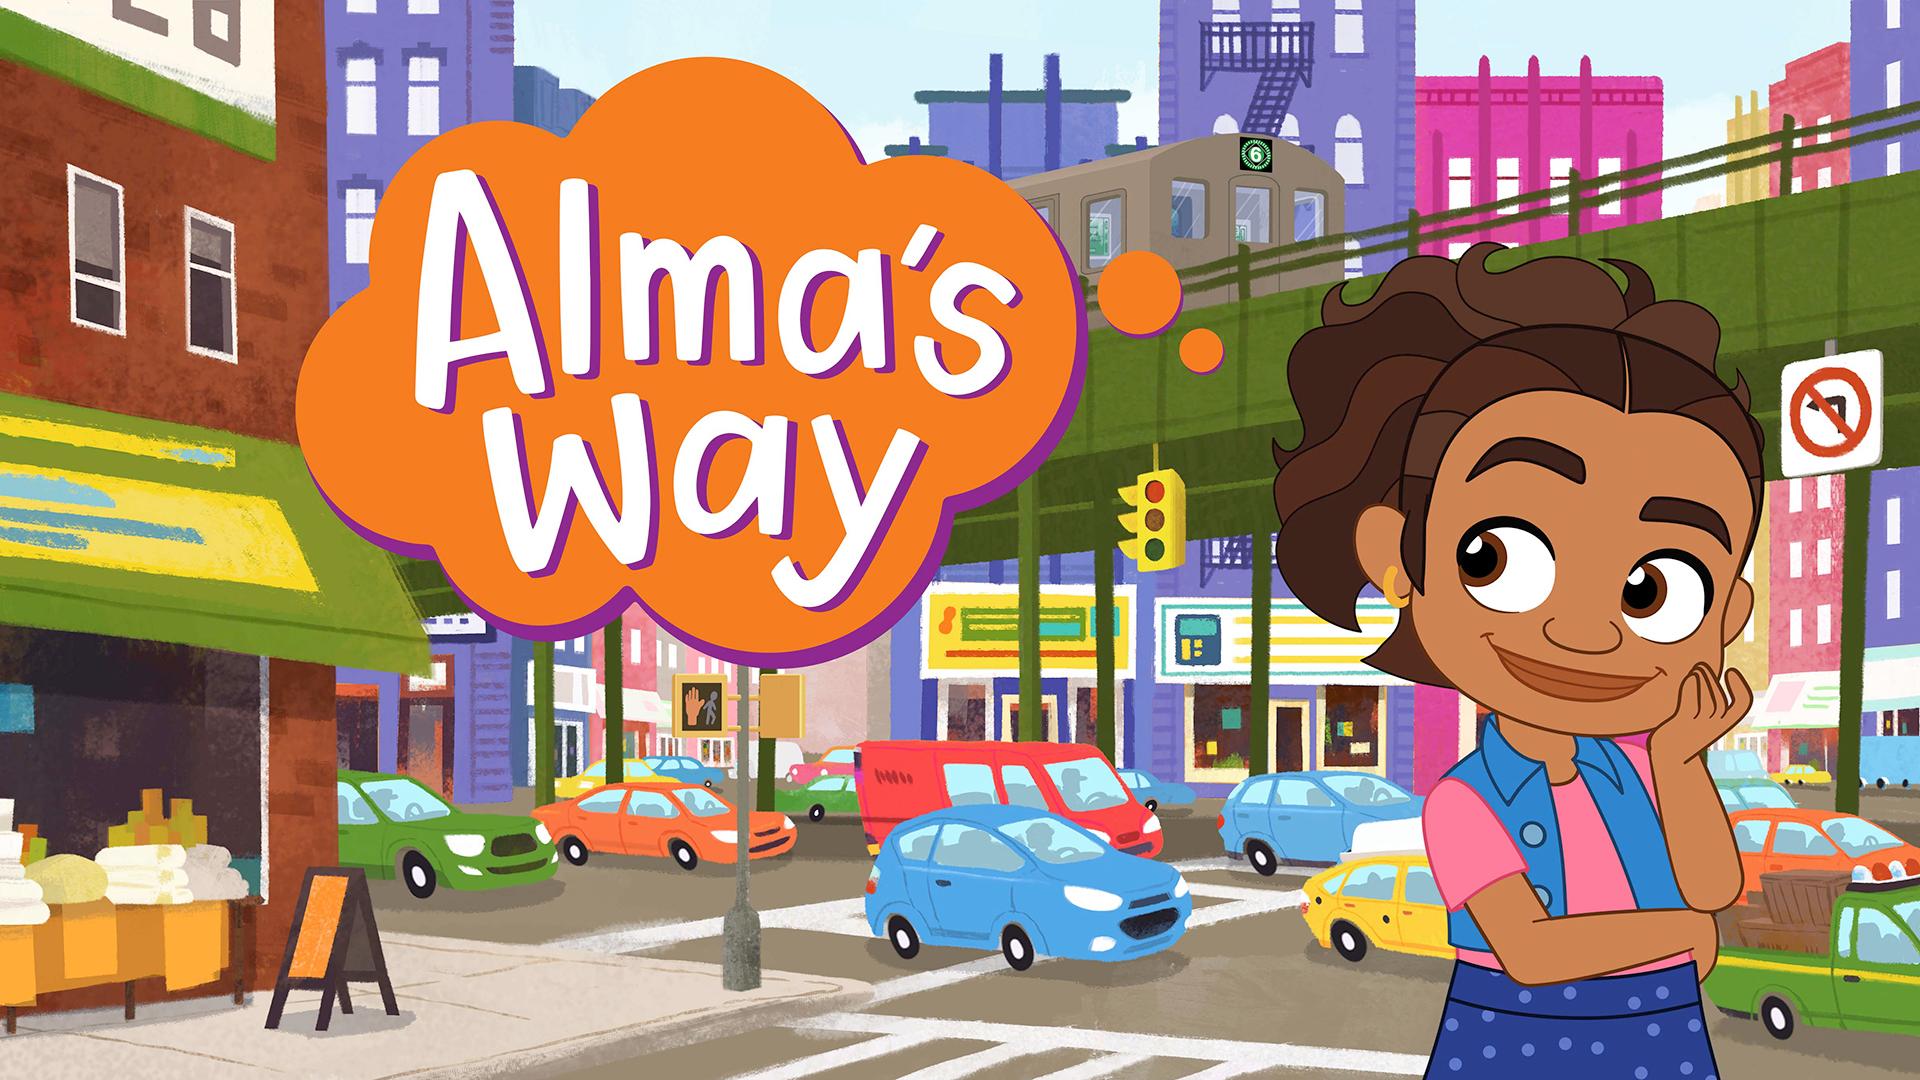 Alma’s Way